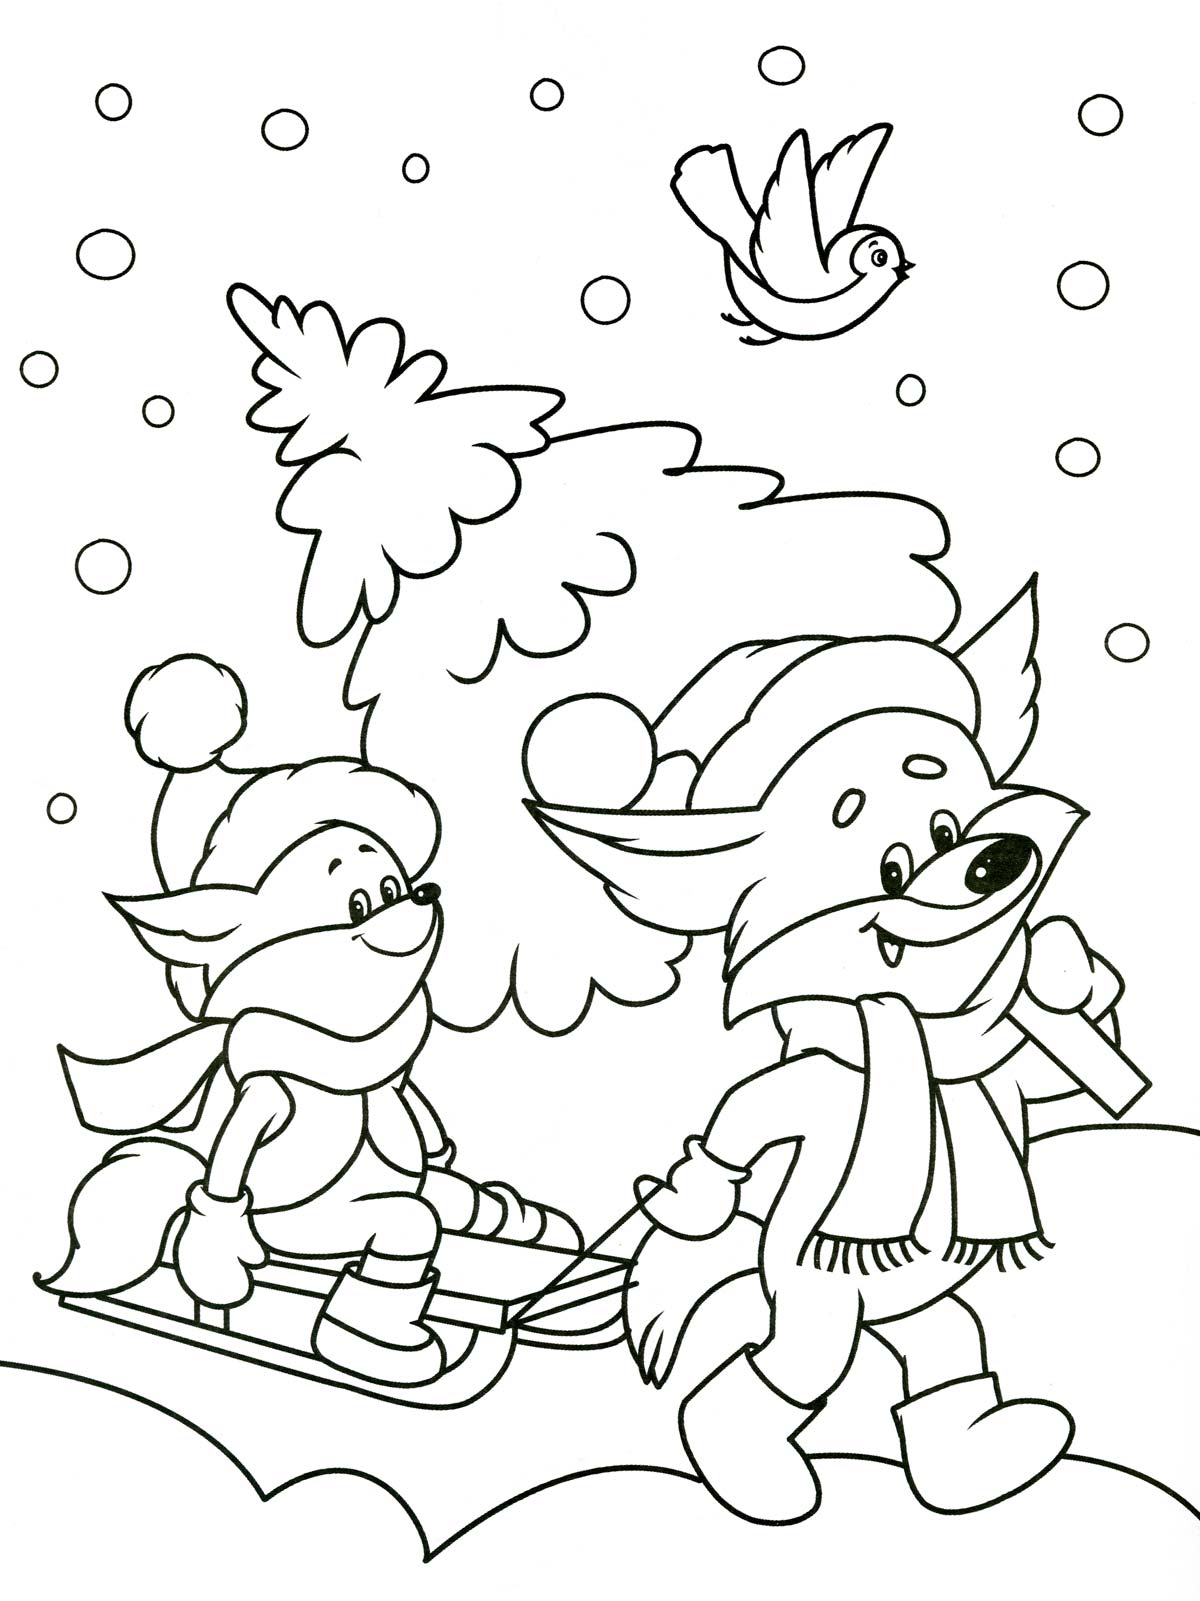 Раскраска лиса с лисенком на санках и елкой, рядом птица снег (лис, птица, снег)